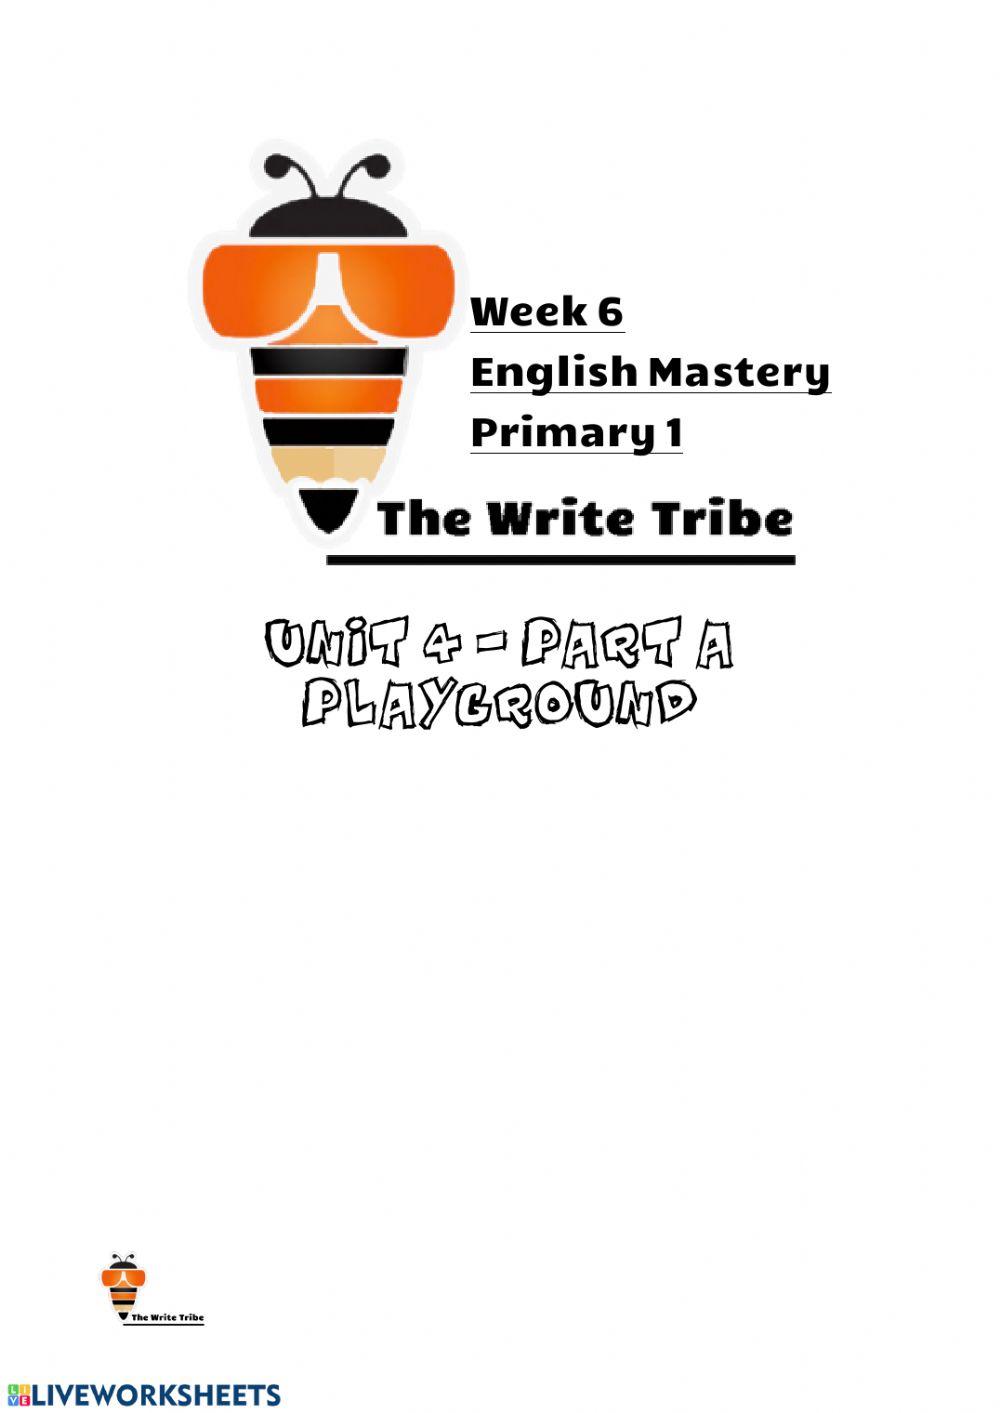 Week 6 - English Mastery